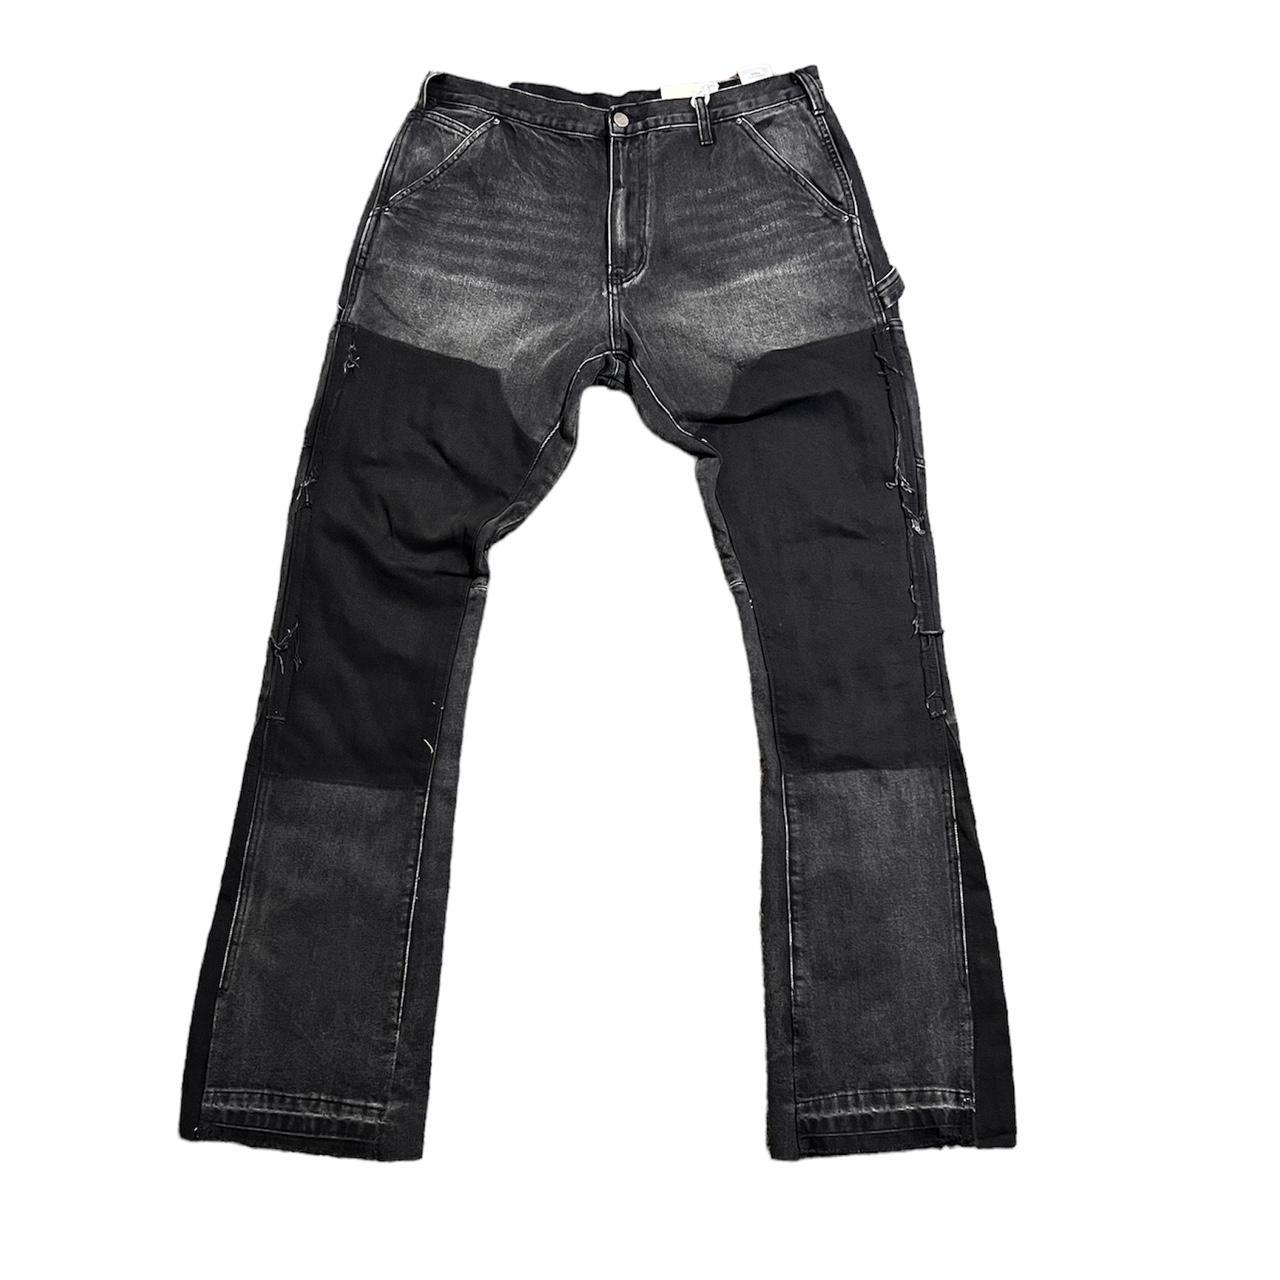 MNML Flared Jeans BrandNew Never Worn Still Has... - Depop